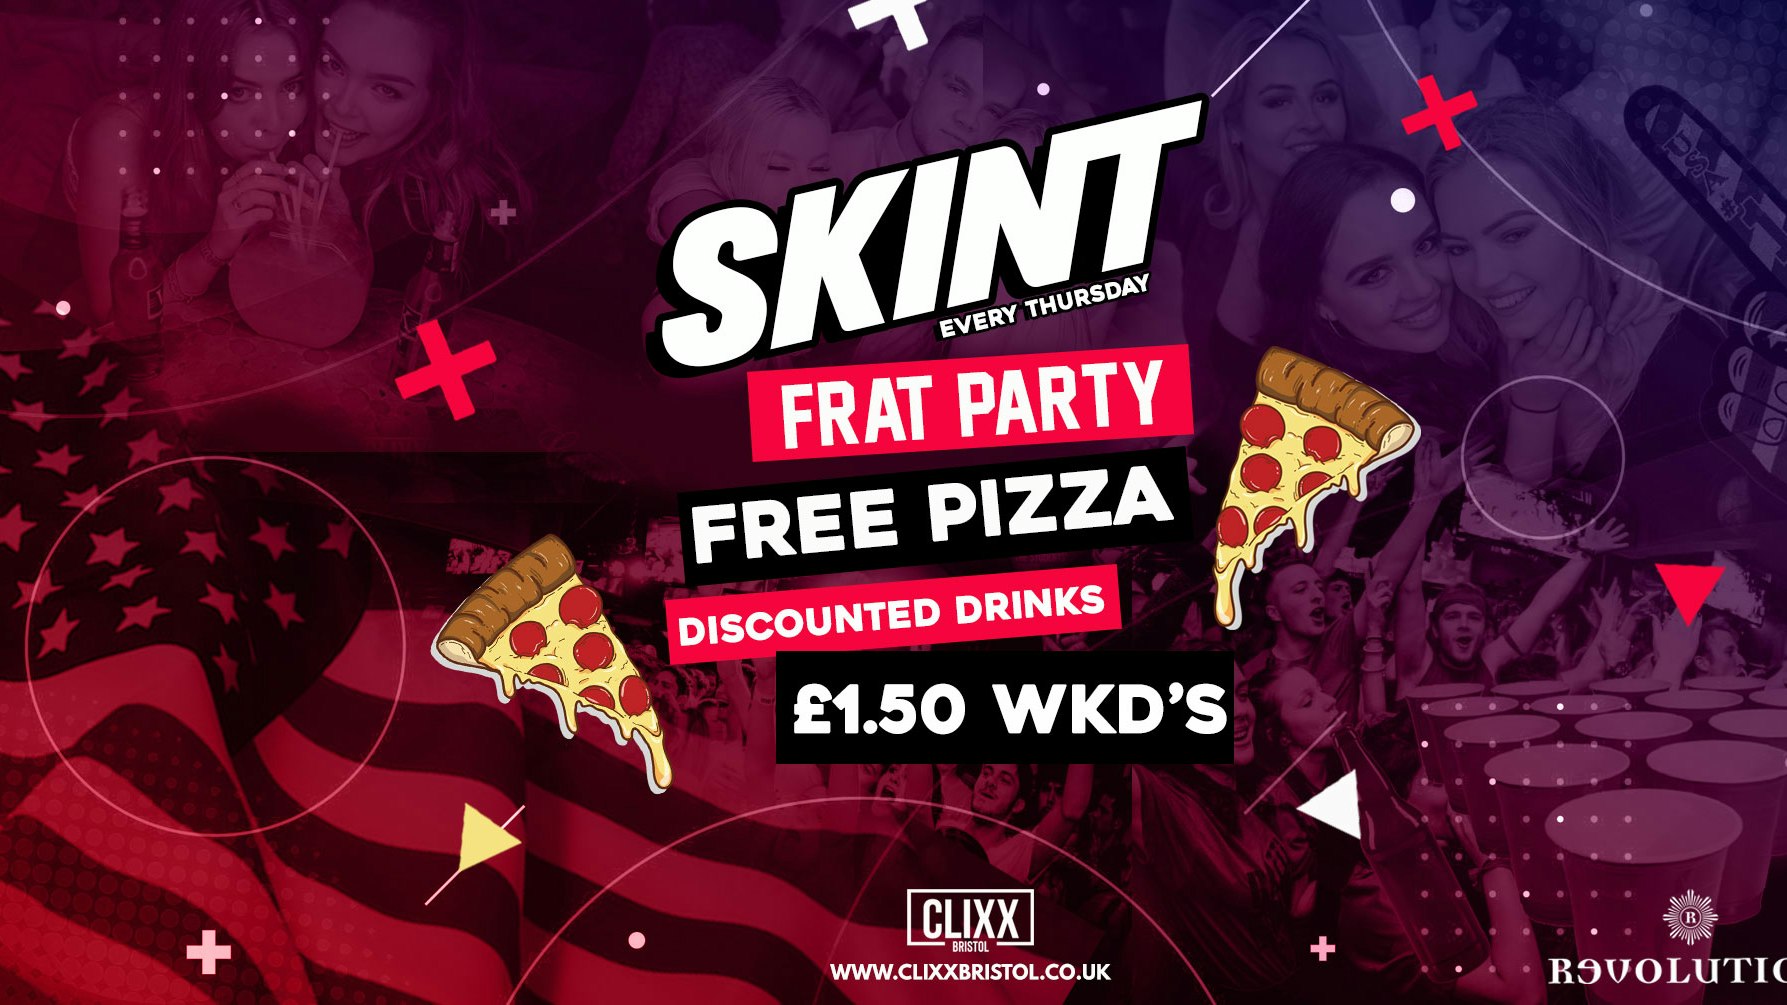 SKINT // FRAT PARTY! – £2 Tickets – FREE PIZZA + £1.50 WKD’s